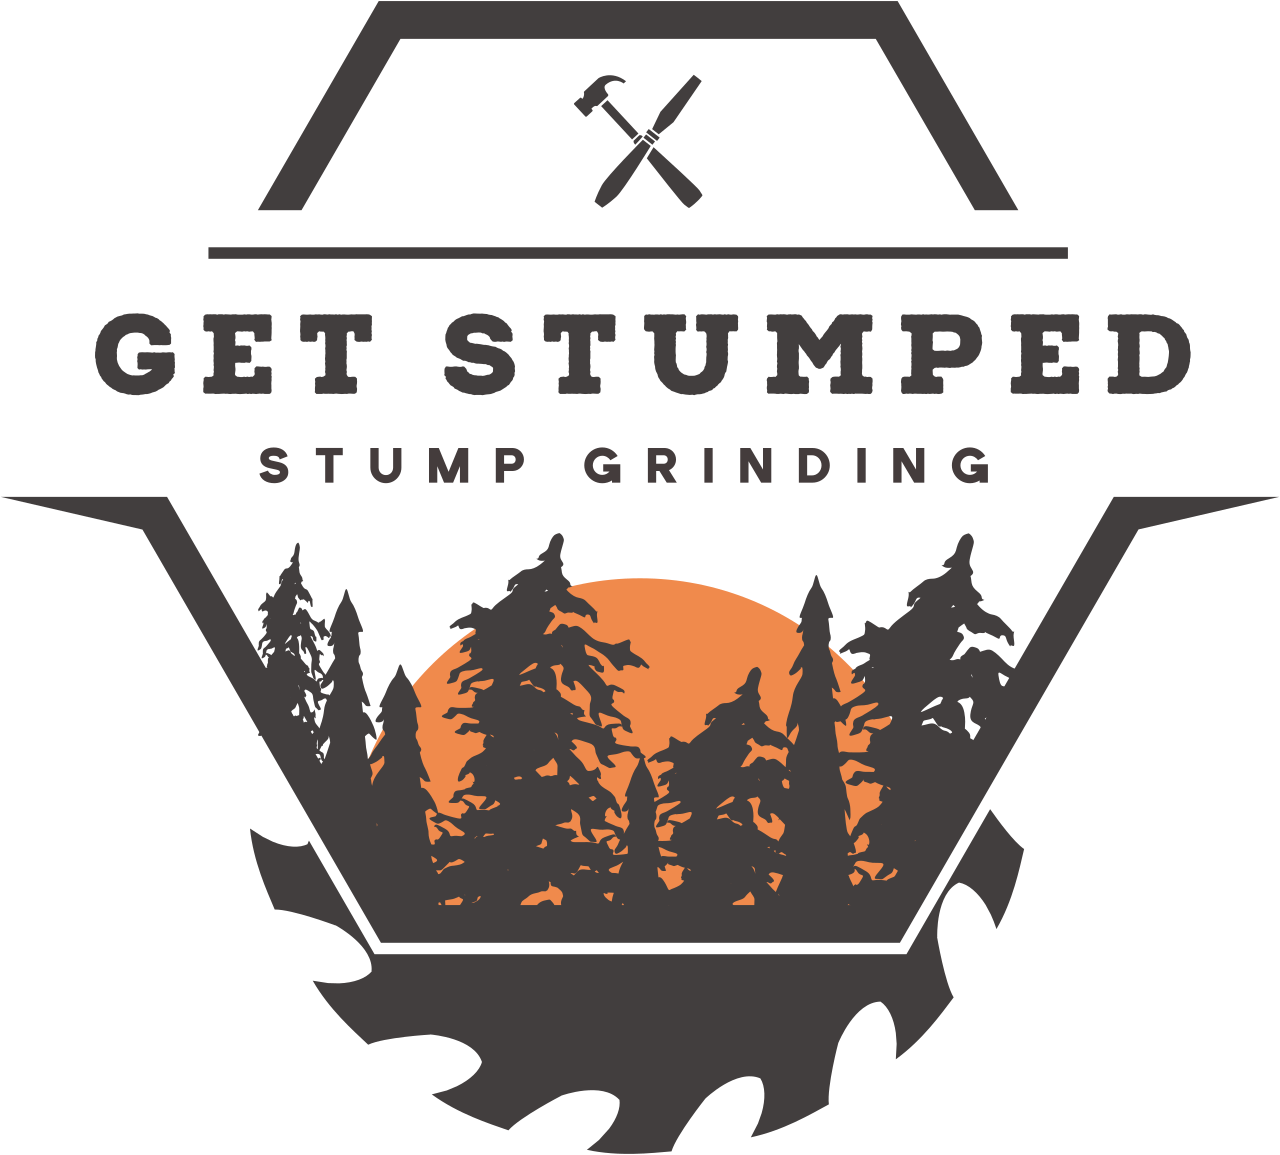 Get Stumped 's logo